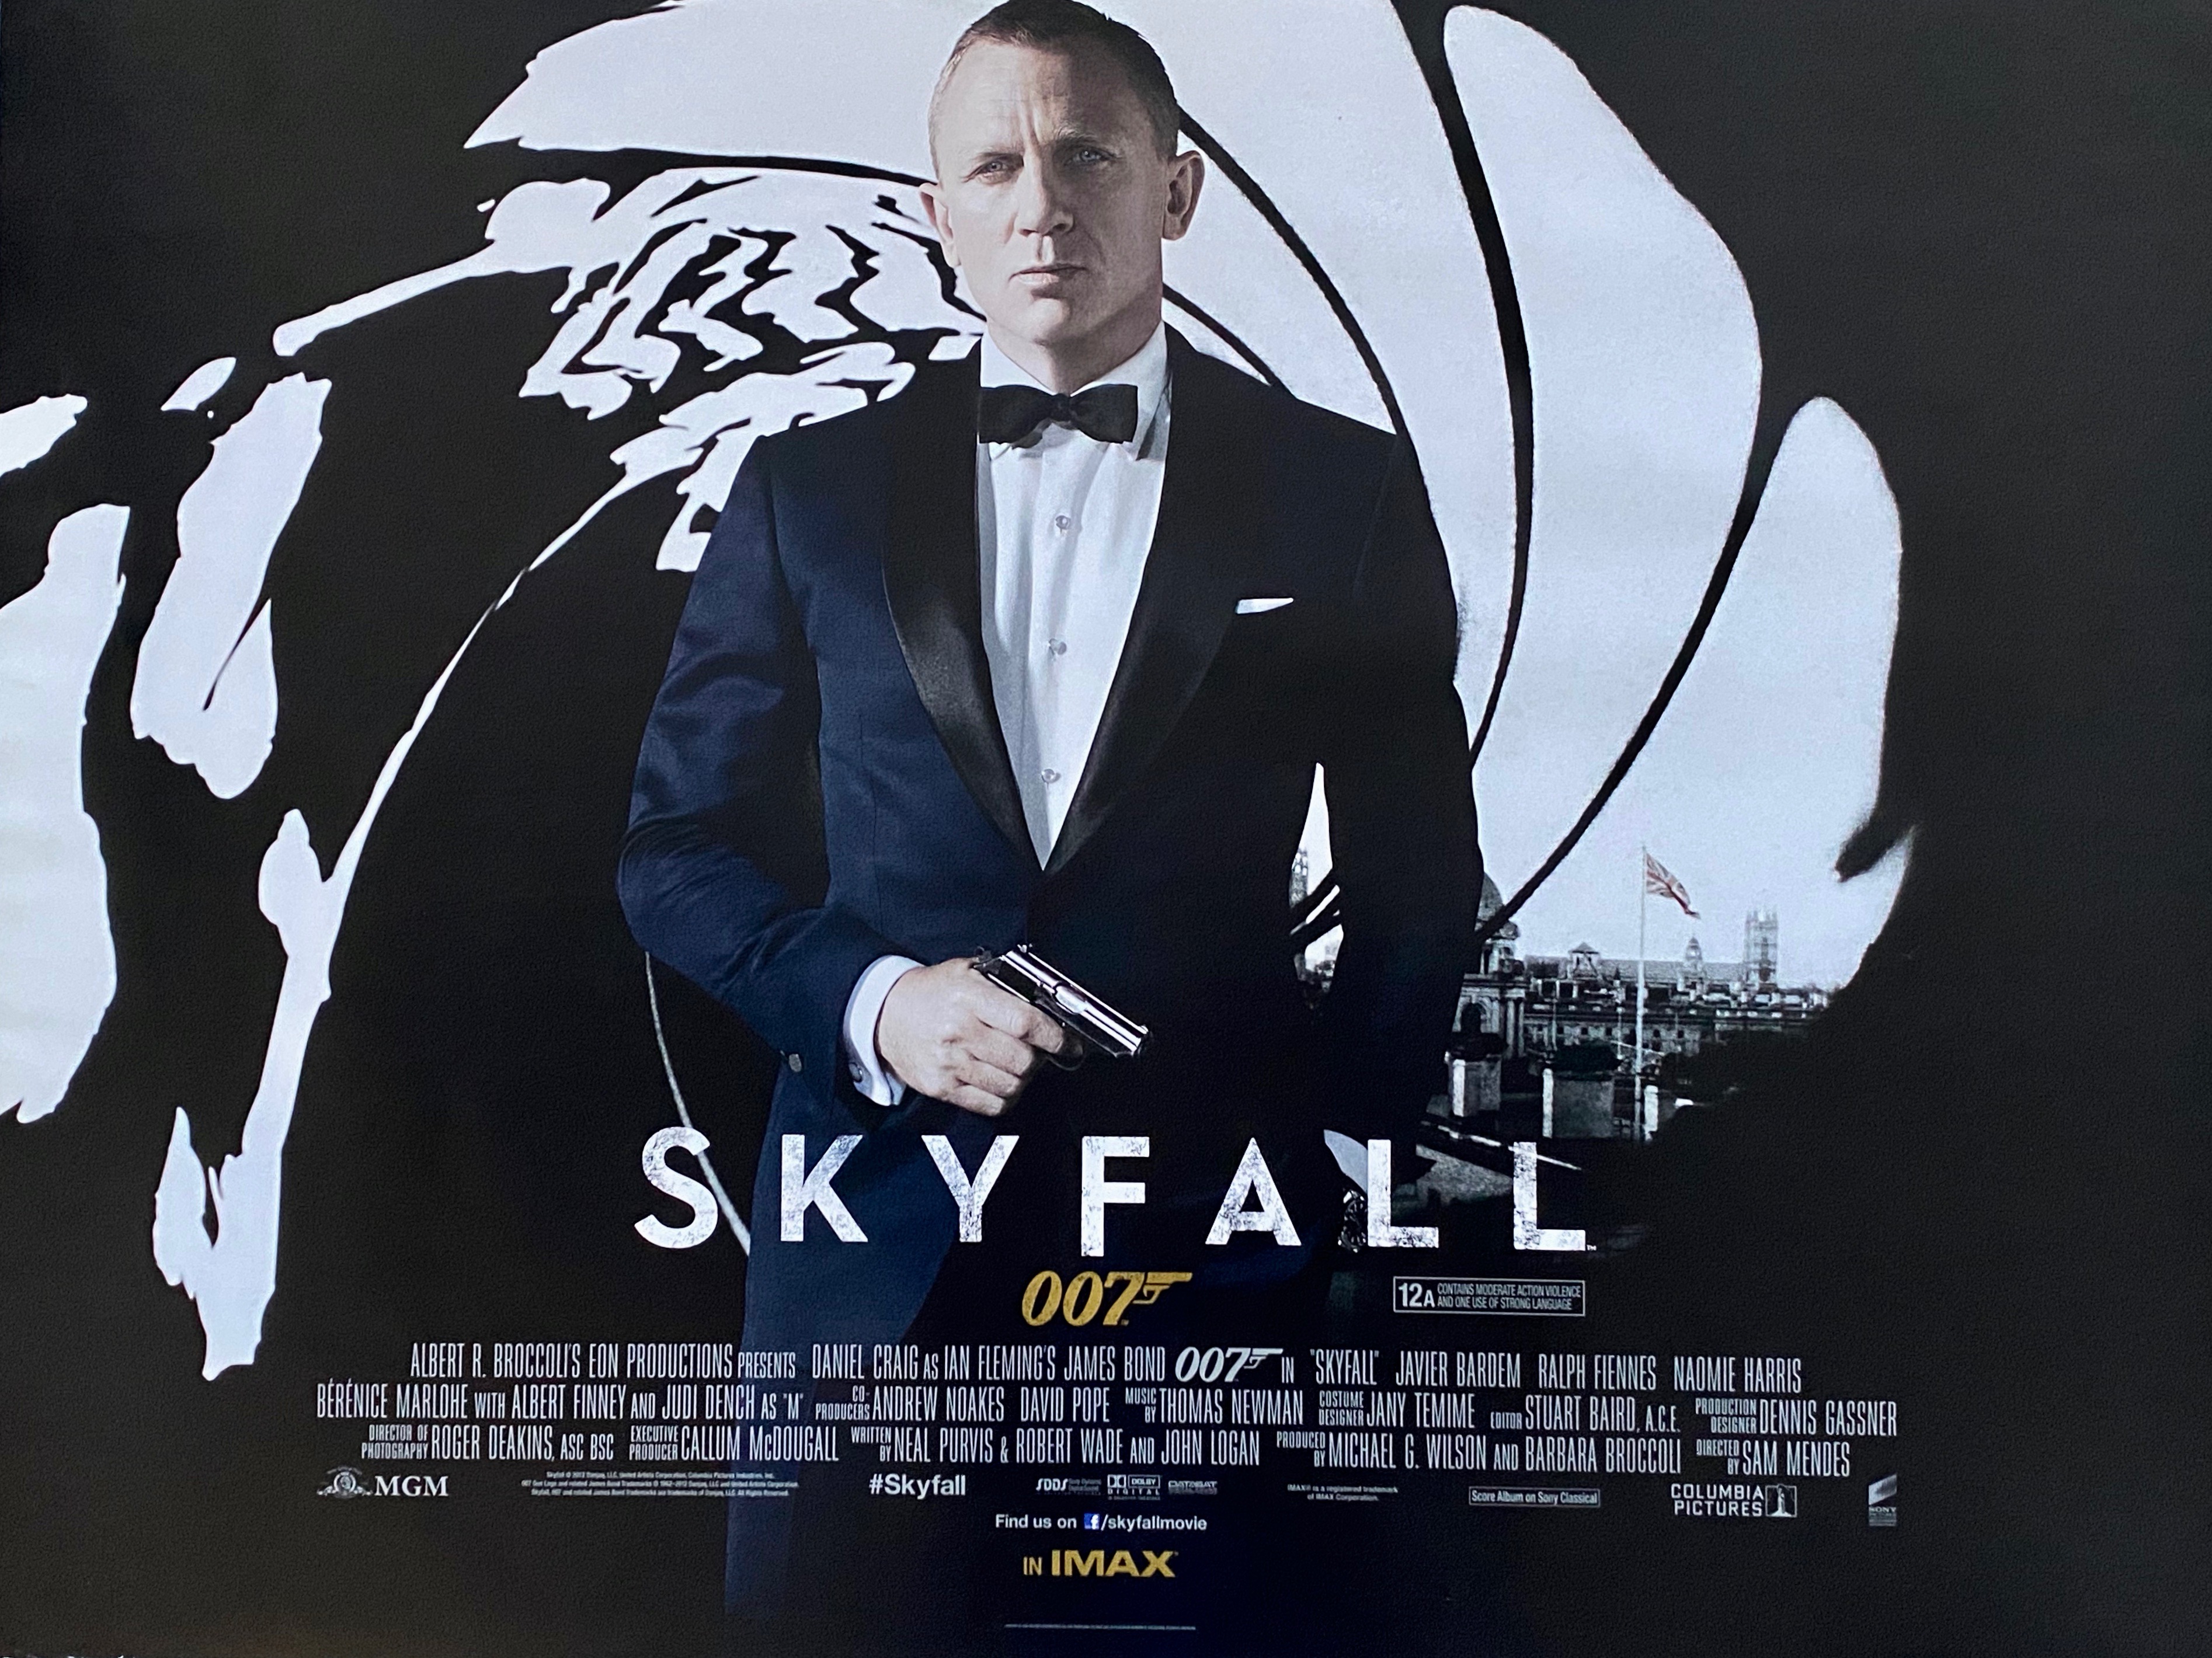 Daniel Craig Skyfall Poster / Daniel craig as benoit blanc. - Infuzionit